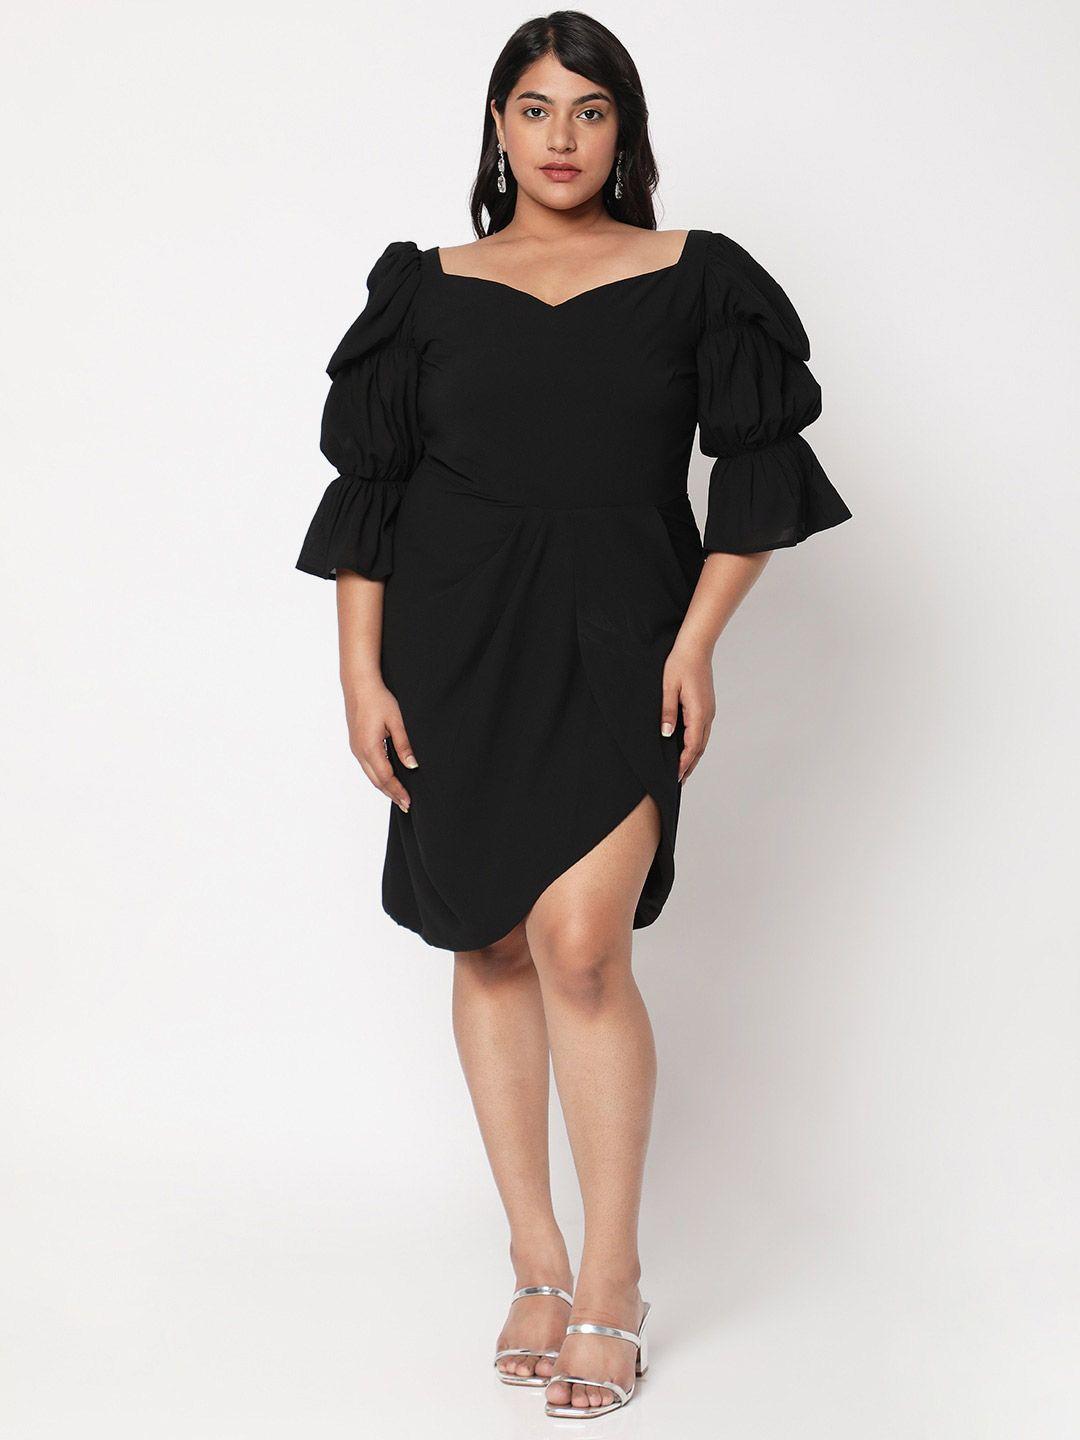 curves by mish black georgette dress